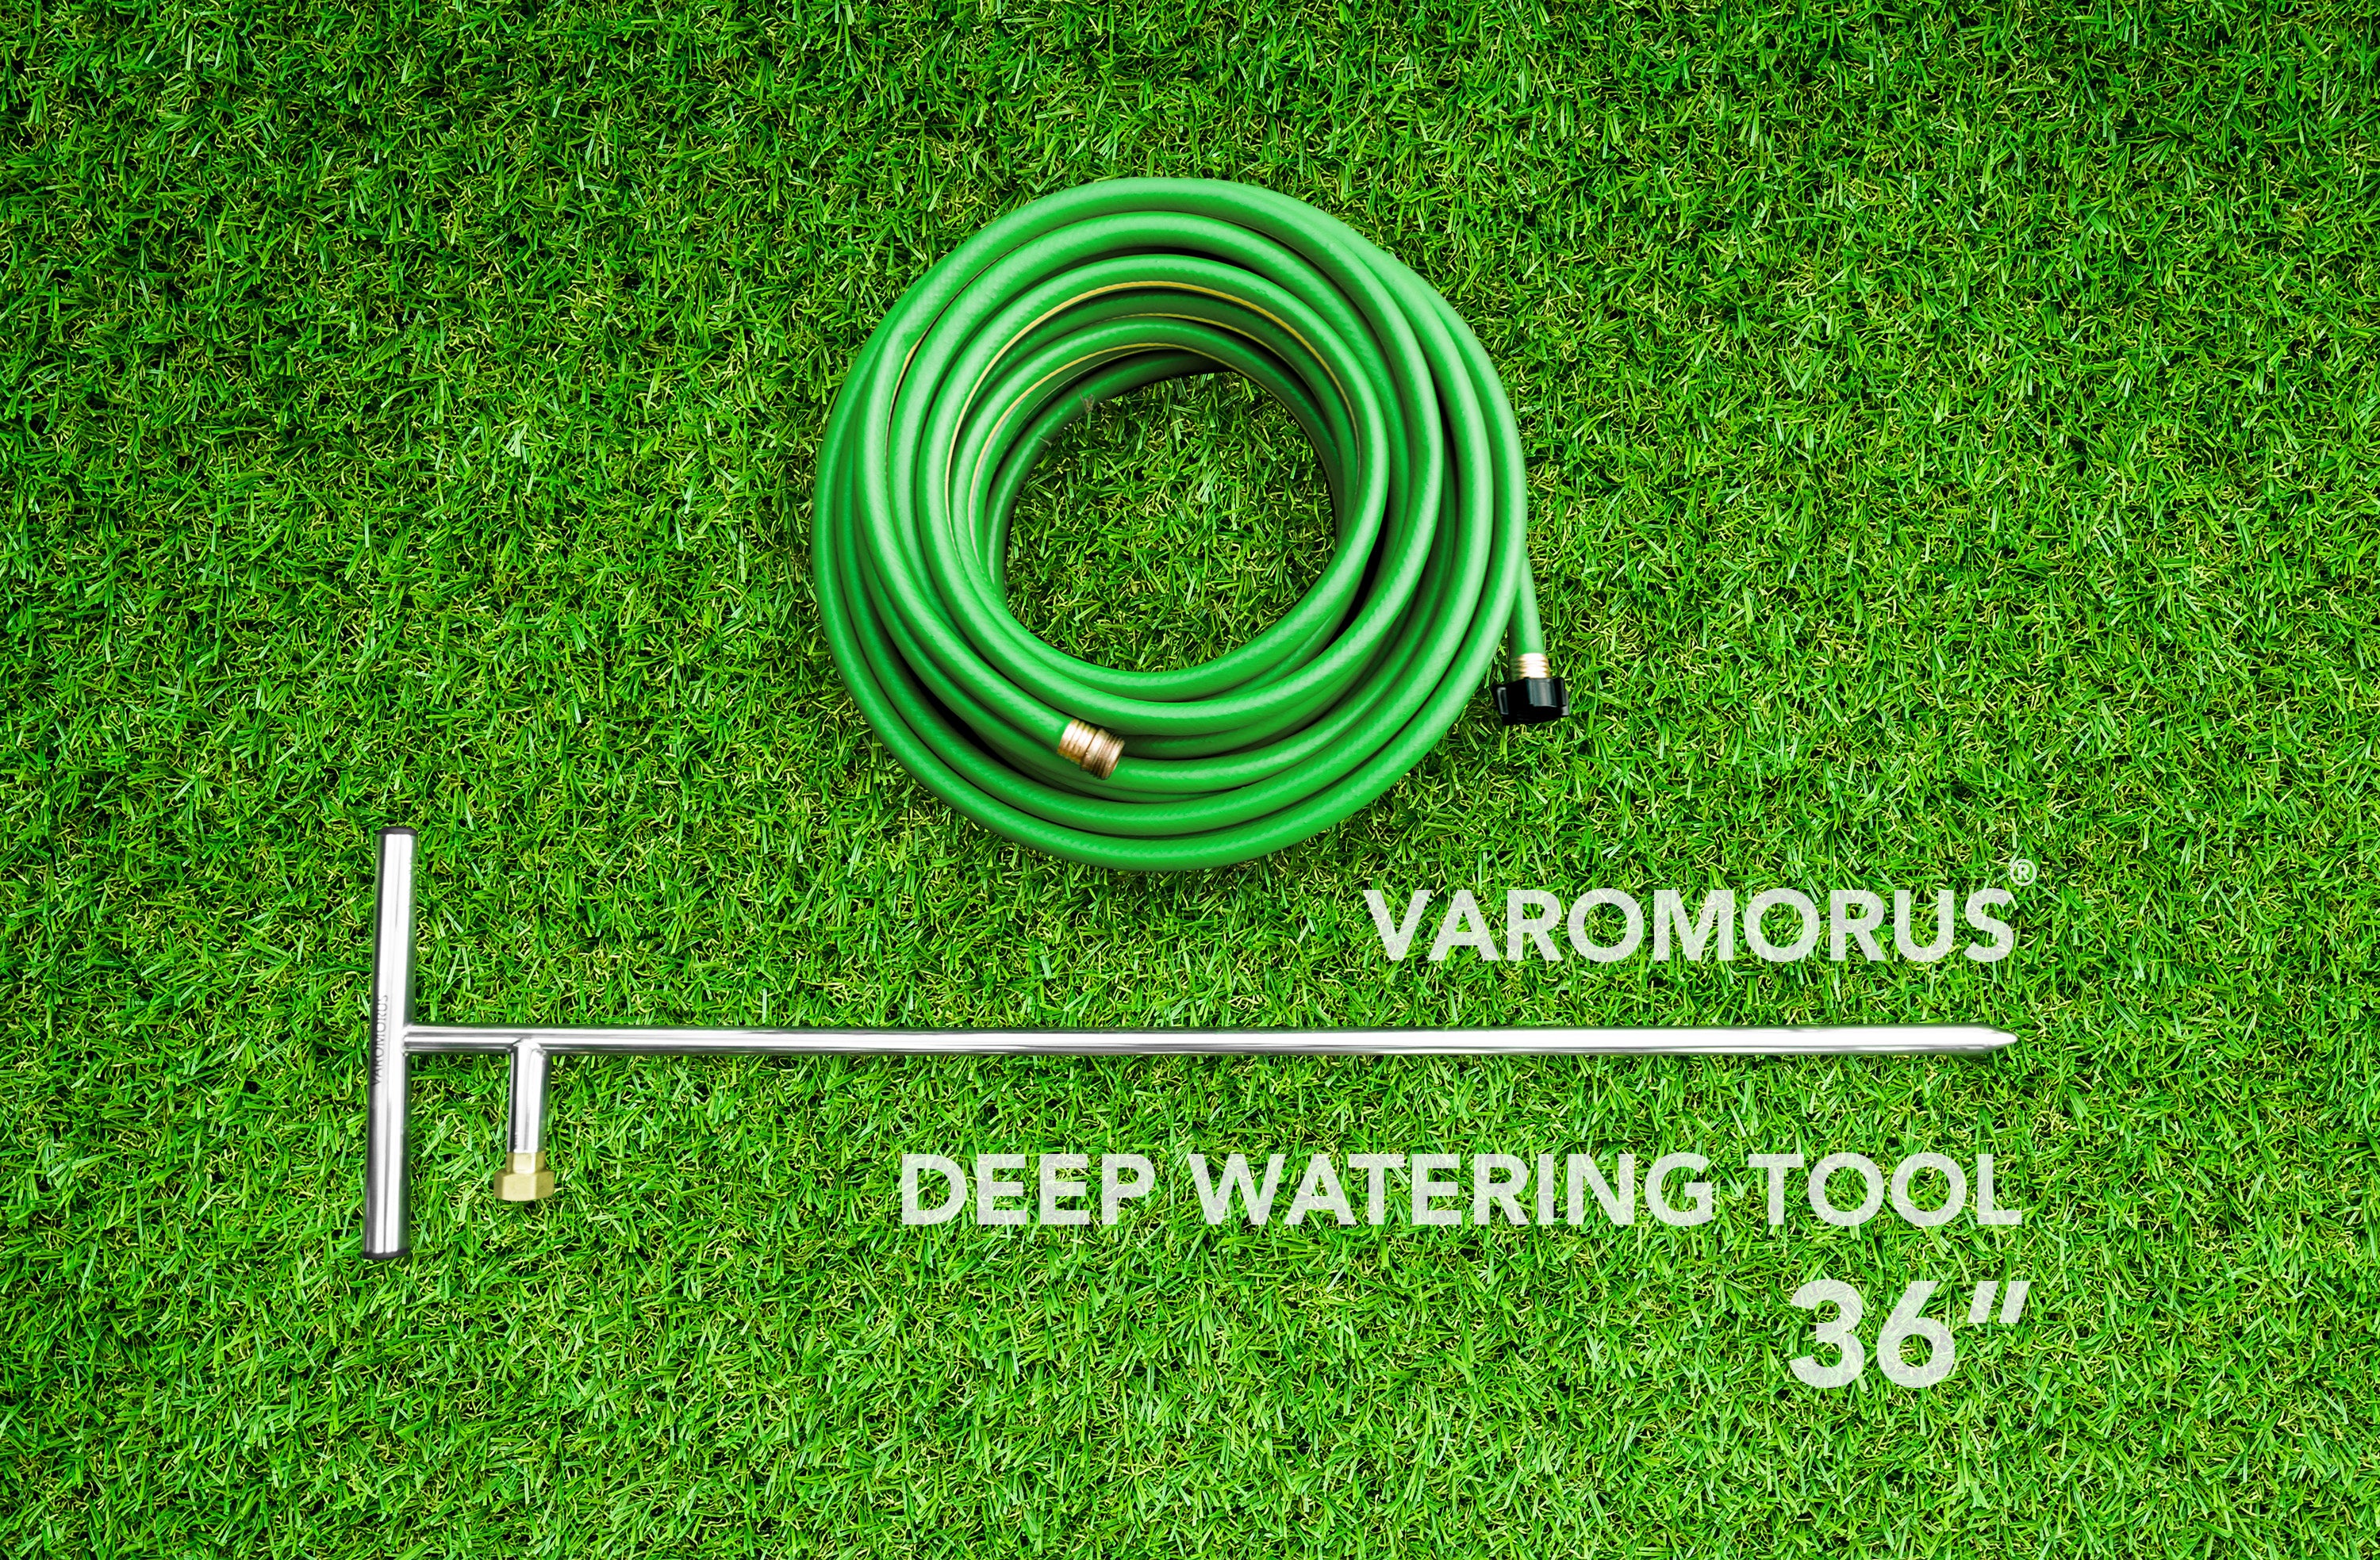 Varomorus Stainless Steel Tree Watering Irrigation Tool